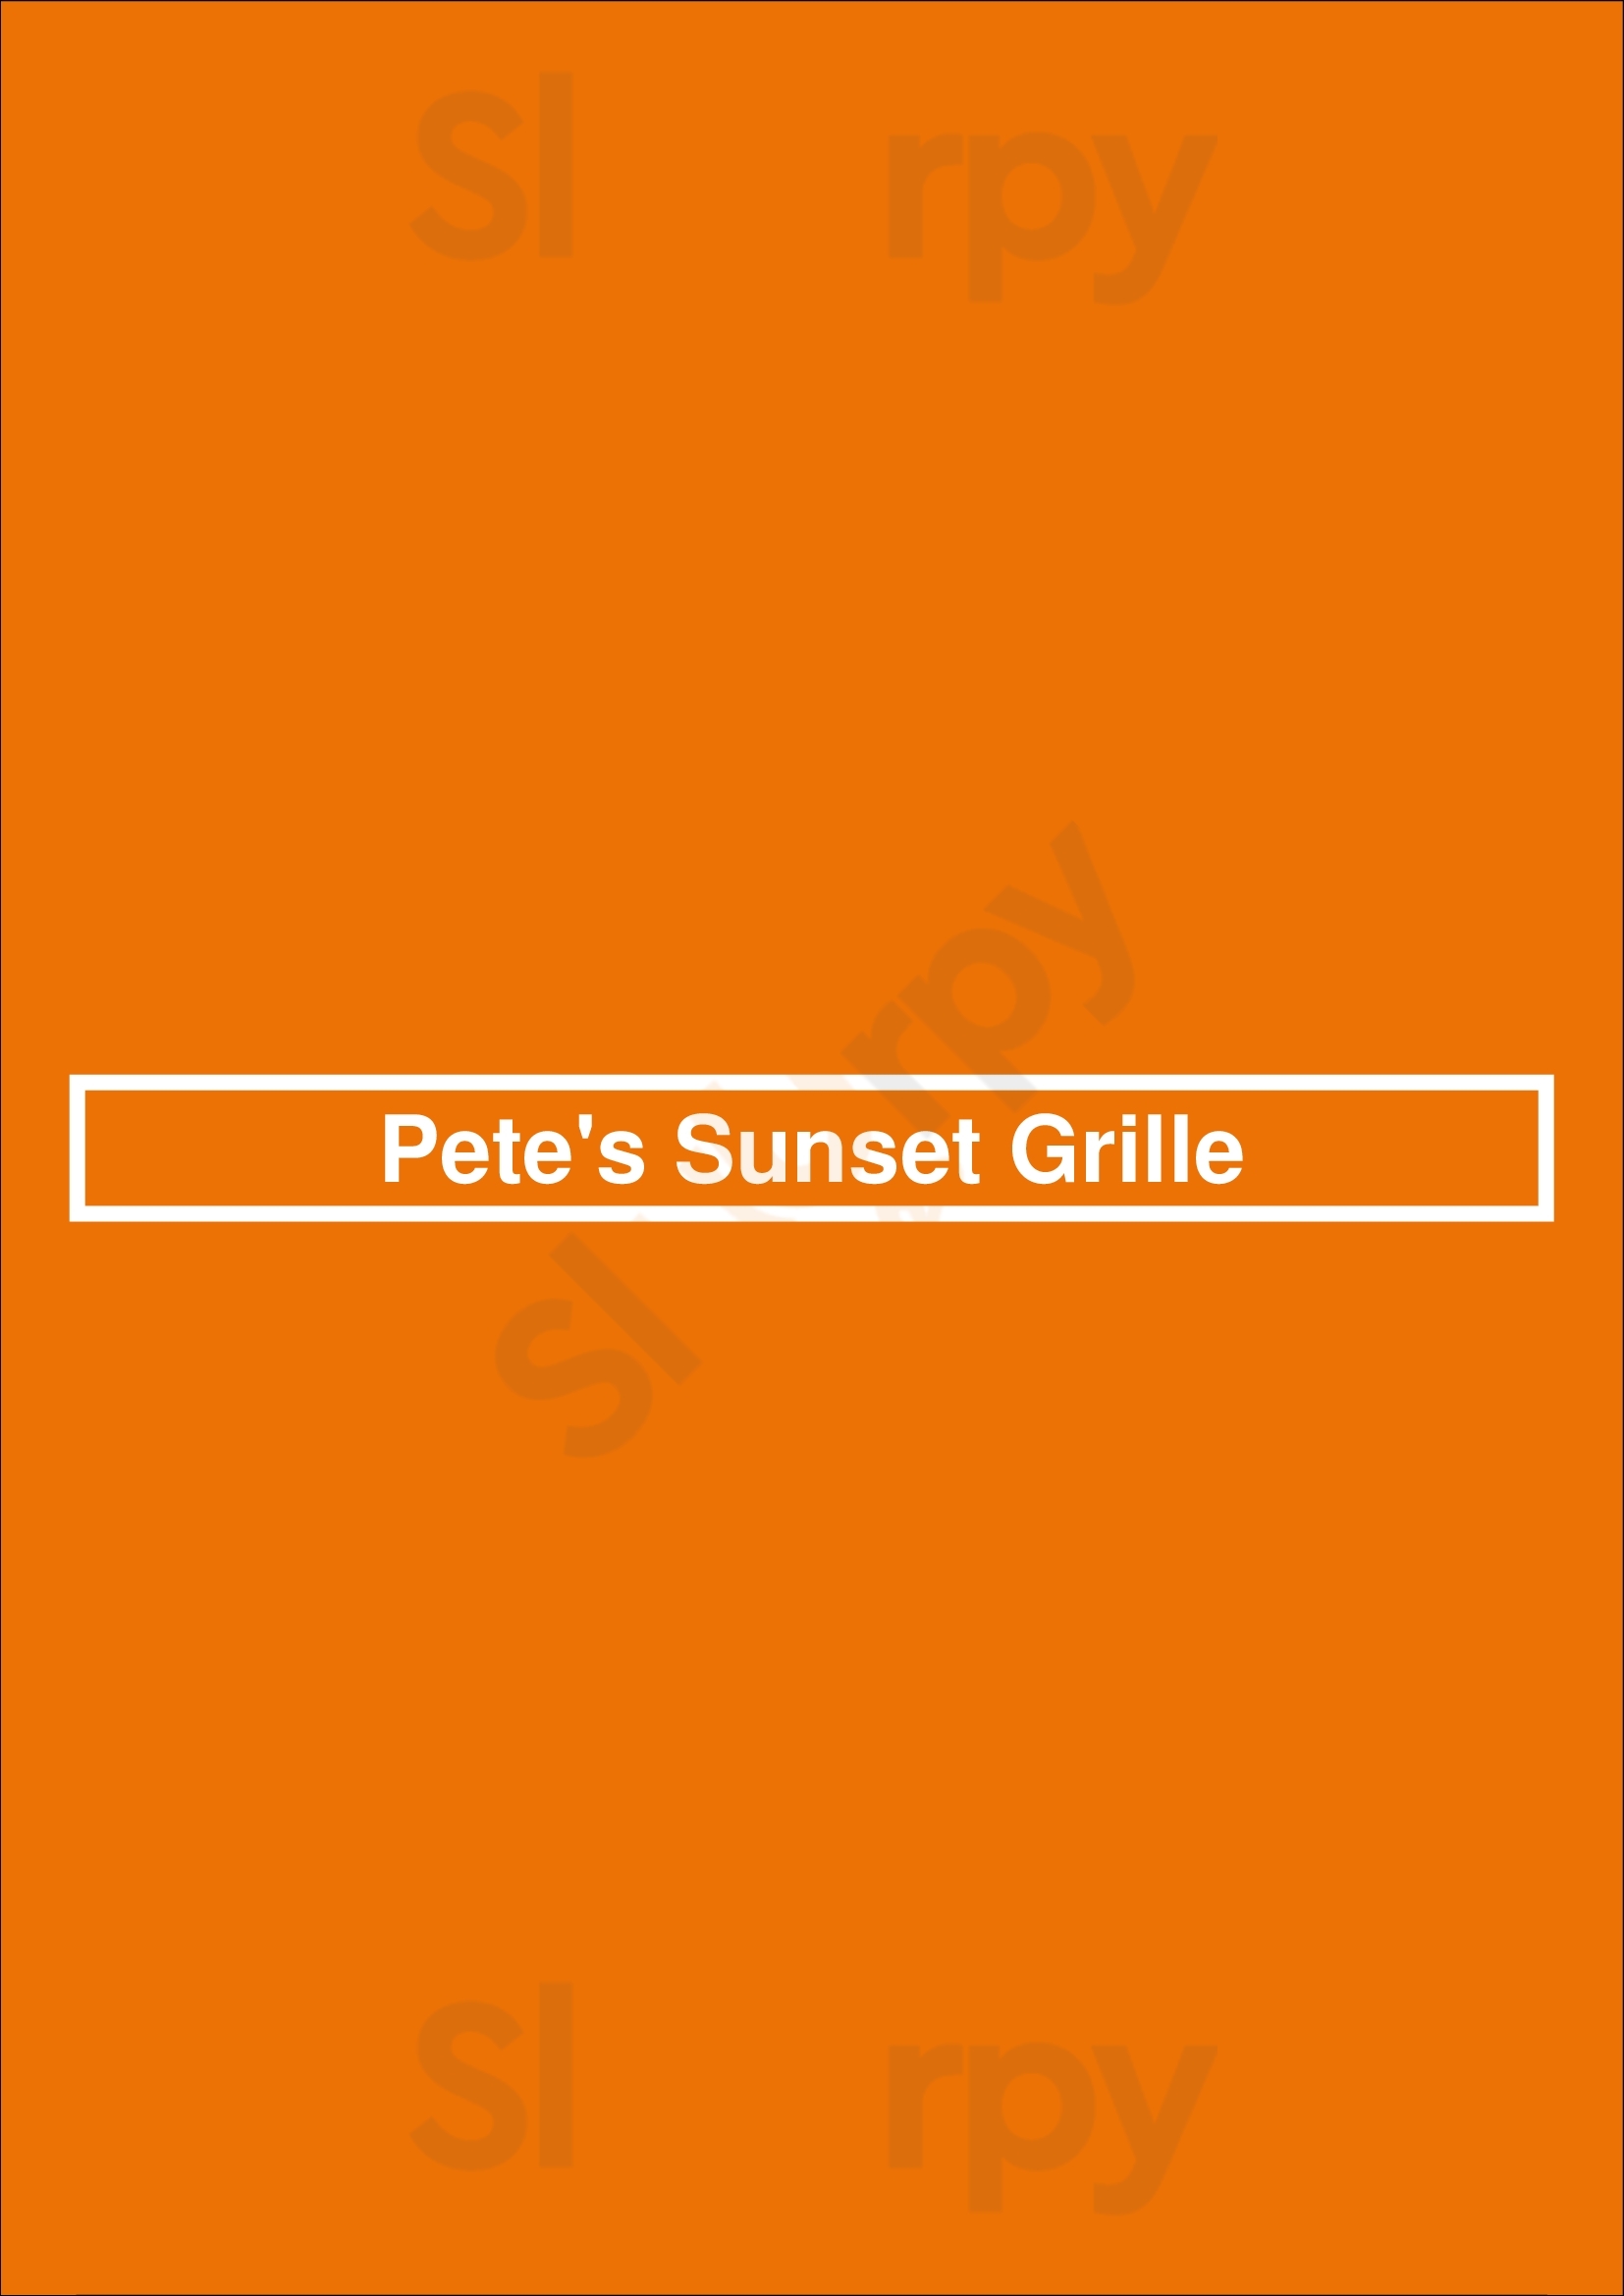 Pete's Sunset Grille Huntington Beach Menu - 1